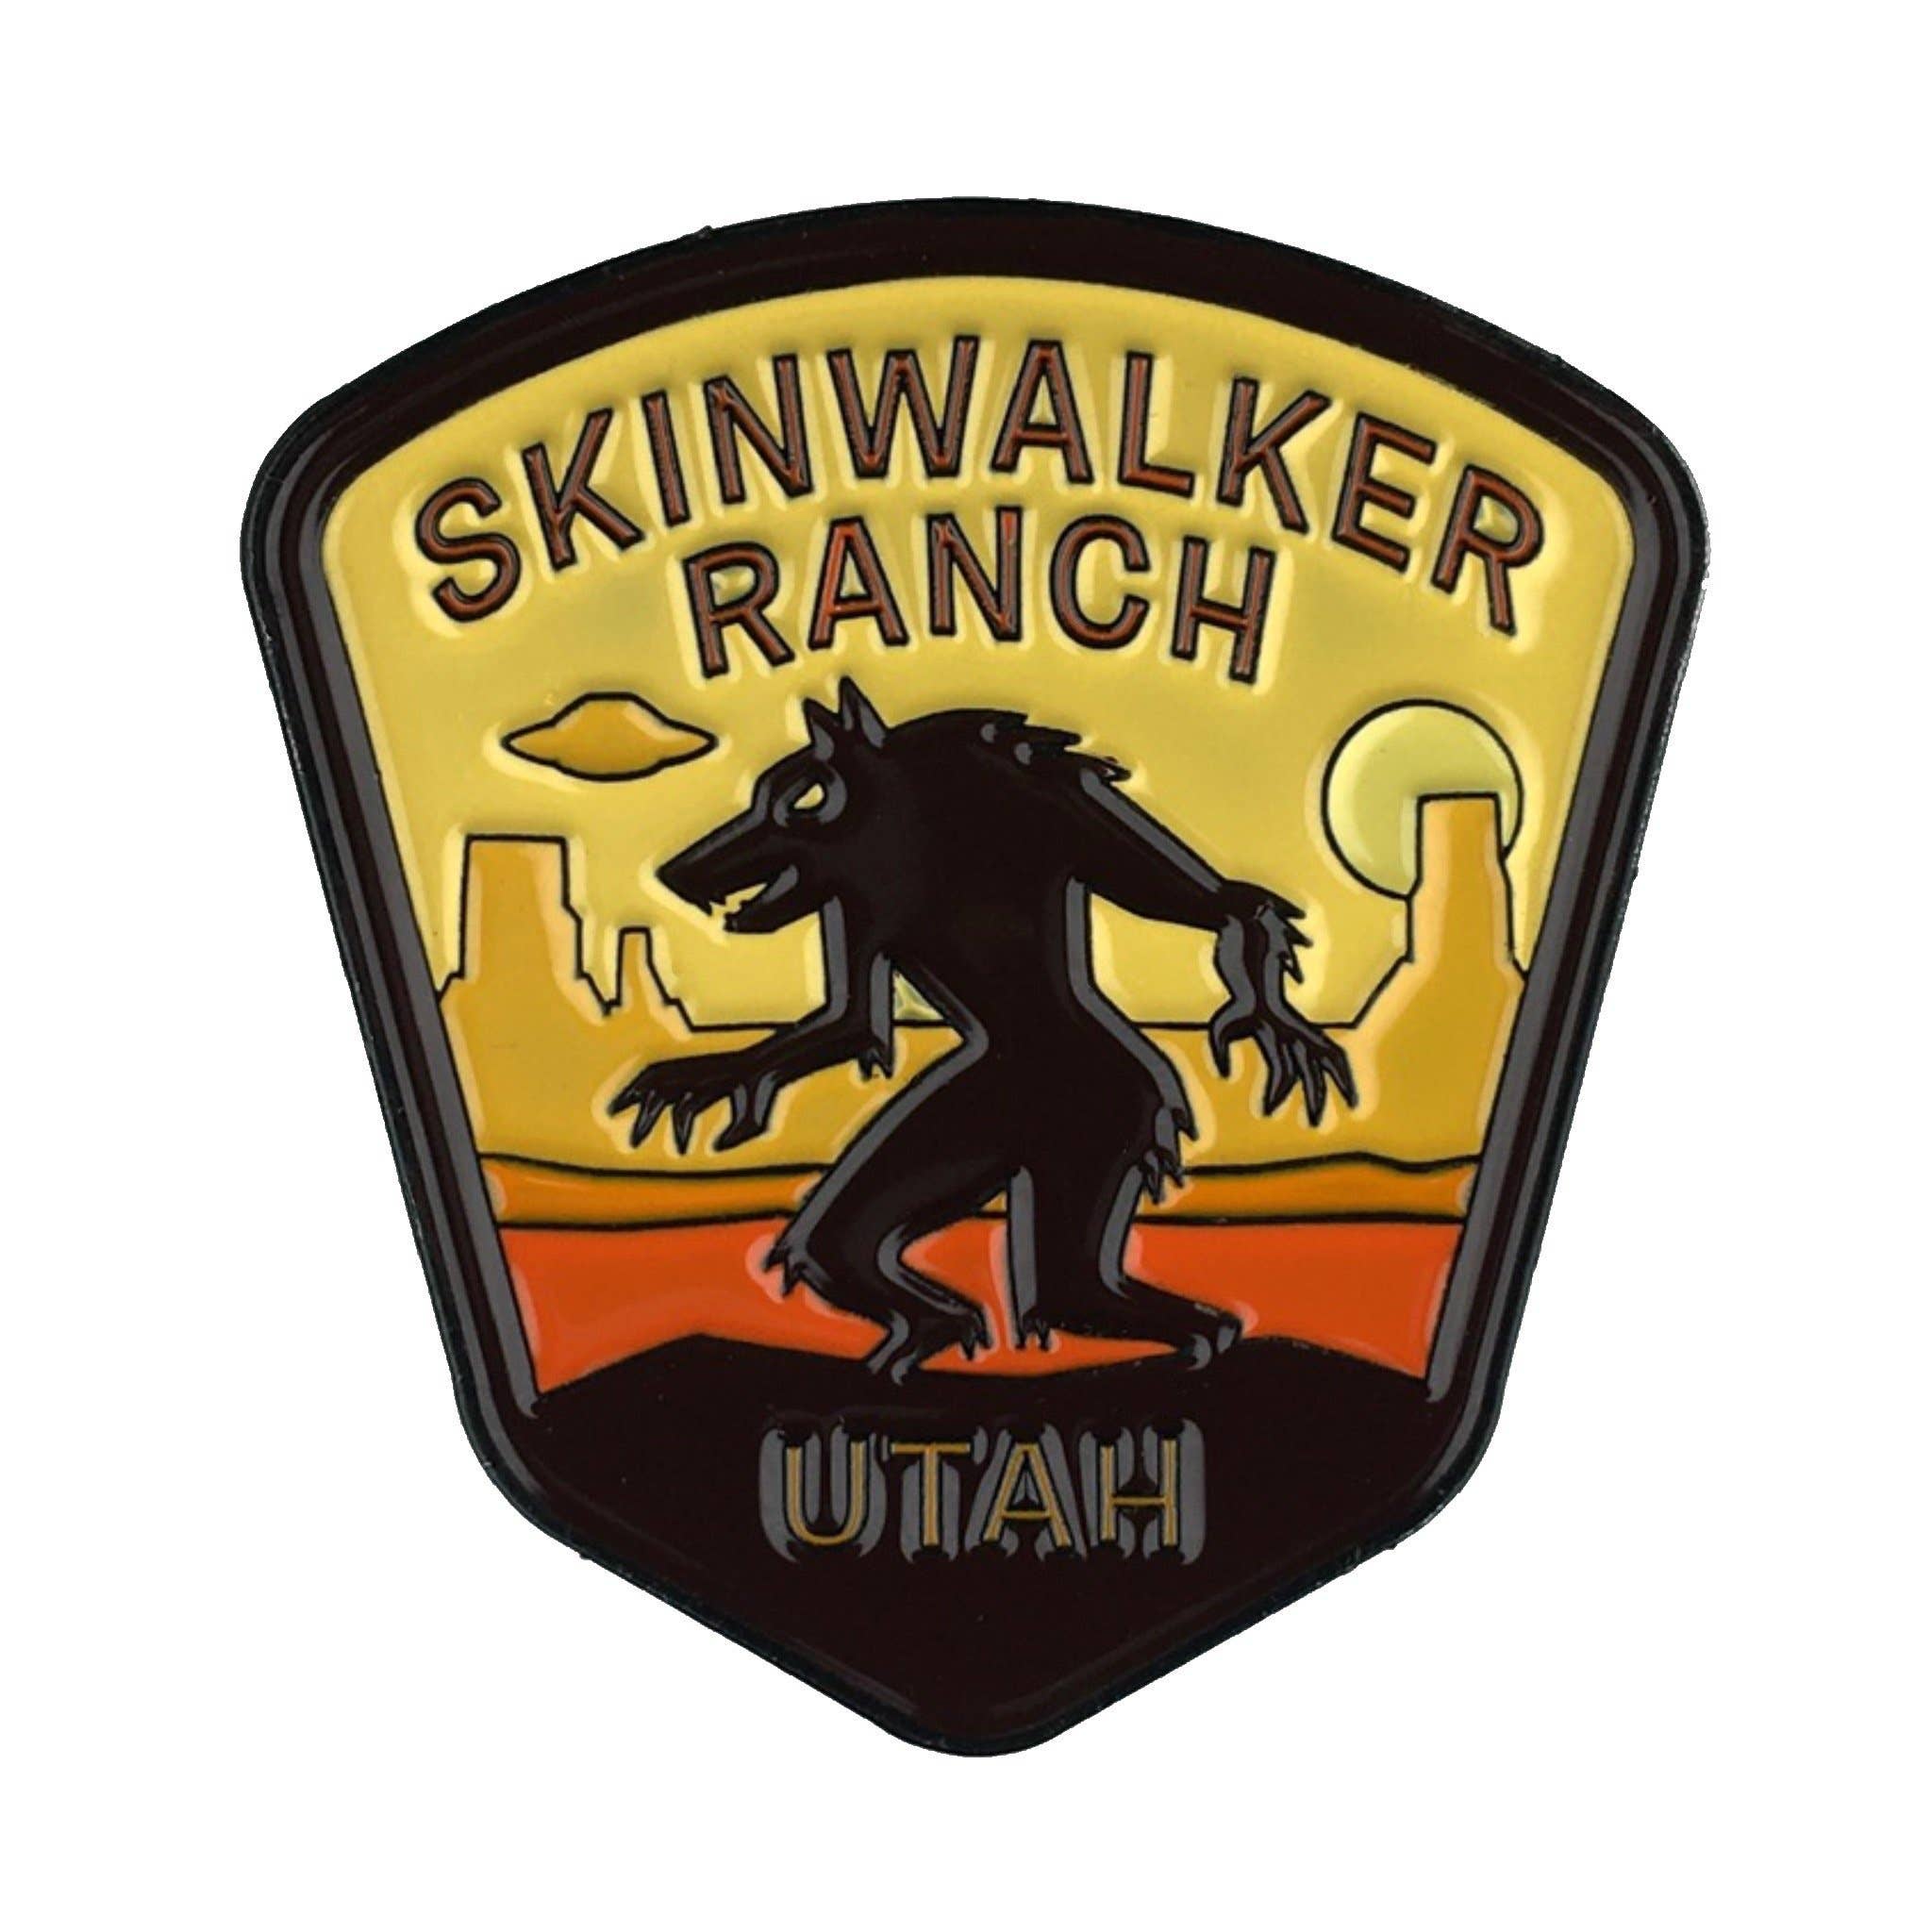 Skinwalker Ranch enamel pin